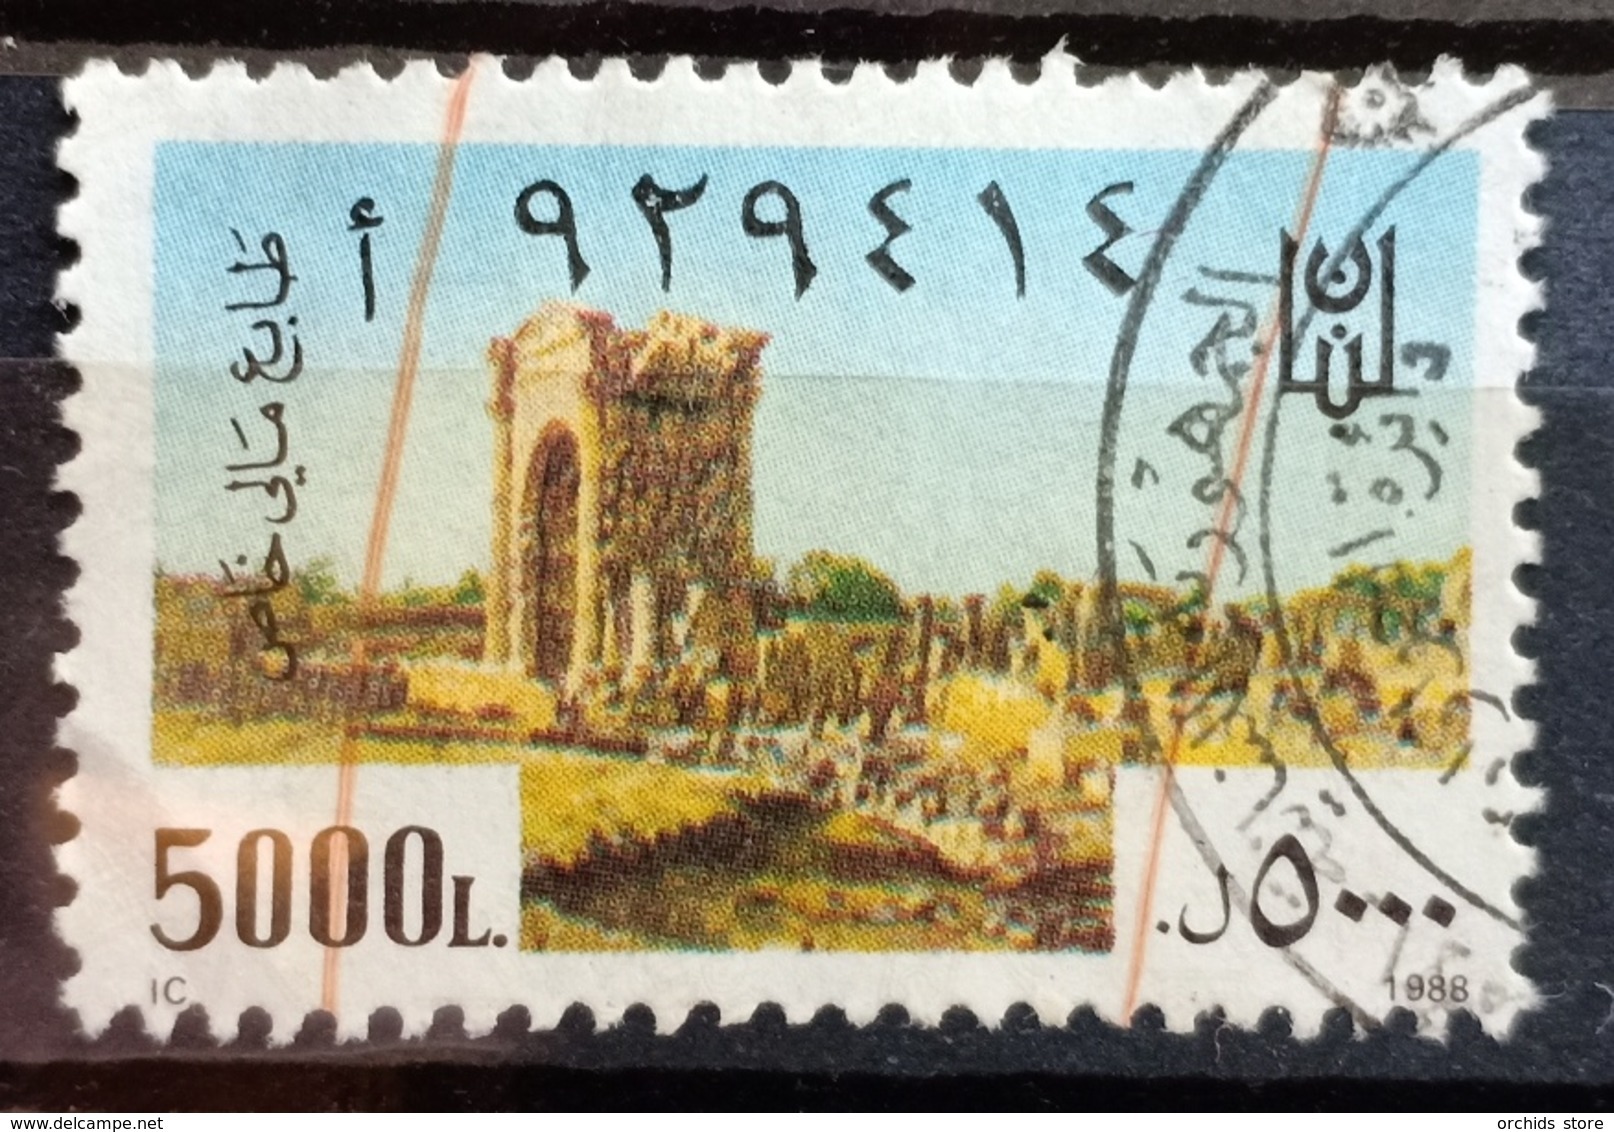 LNPC - Lebanon 1988 5000L Special Fiscal Revenue Stamp (Passport) - Lebanon